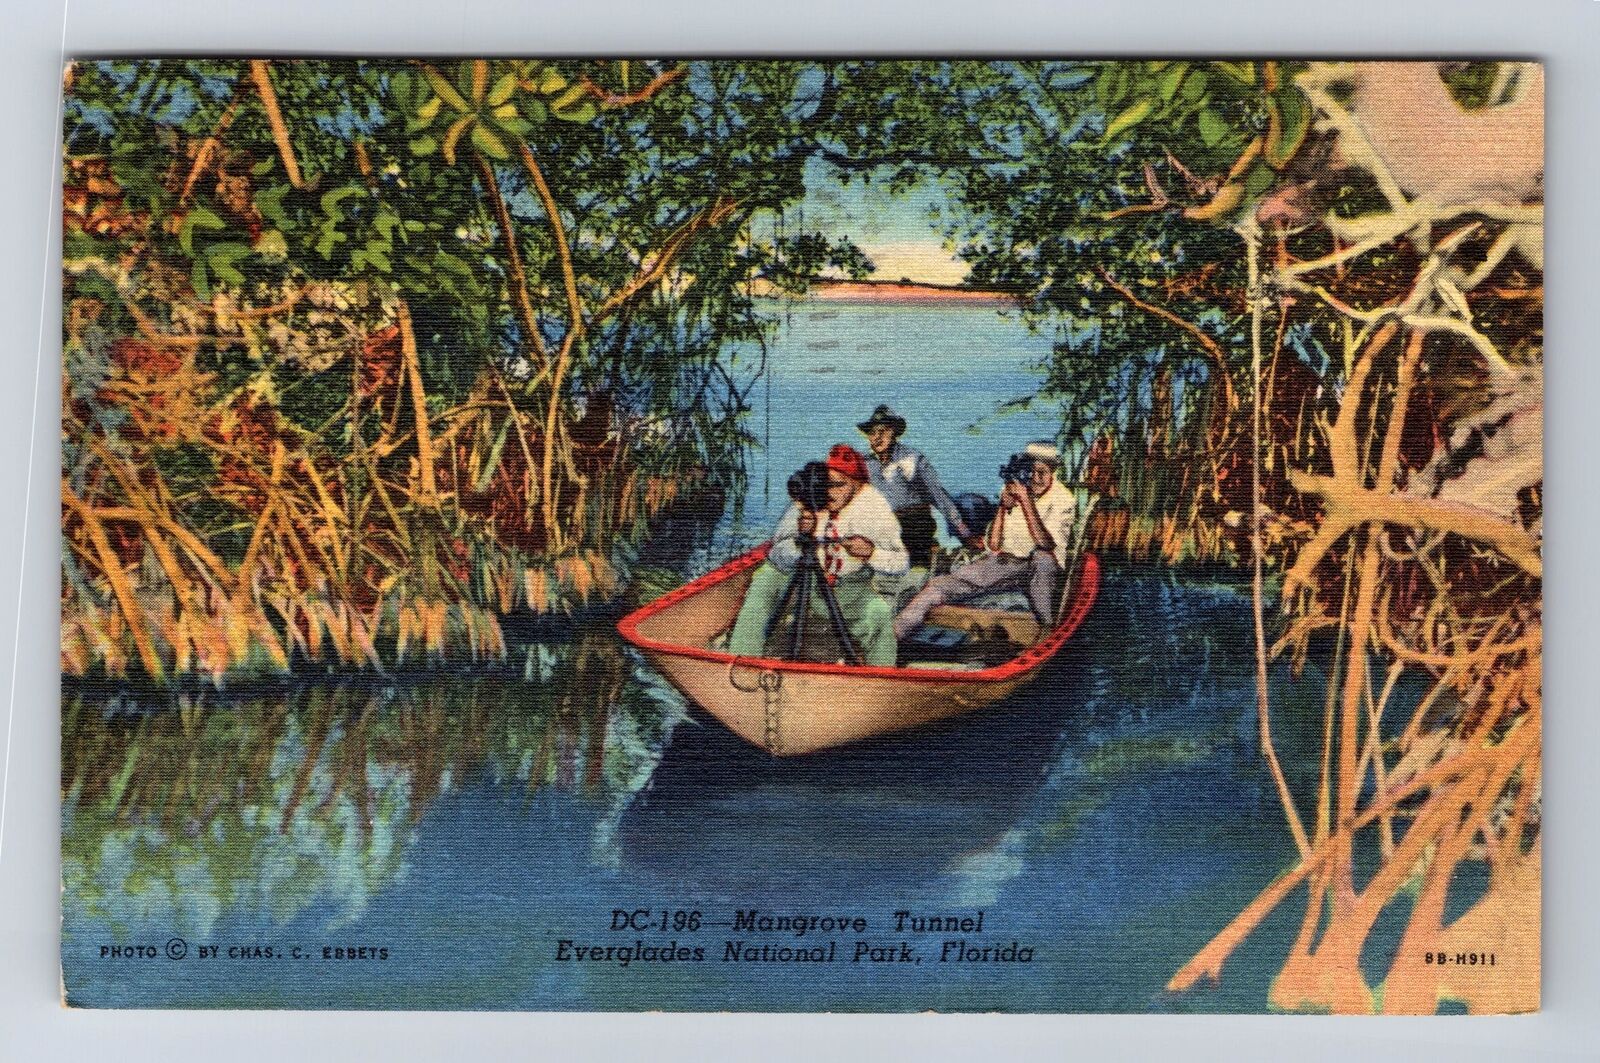 Everglades National Park, Mangrove Tunnel, Series #DC196, Vintage Postcard